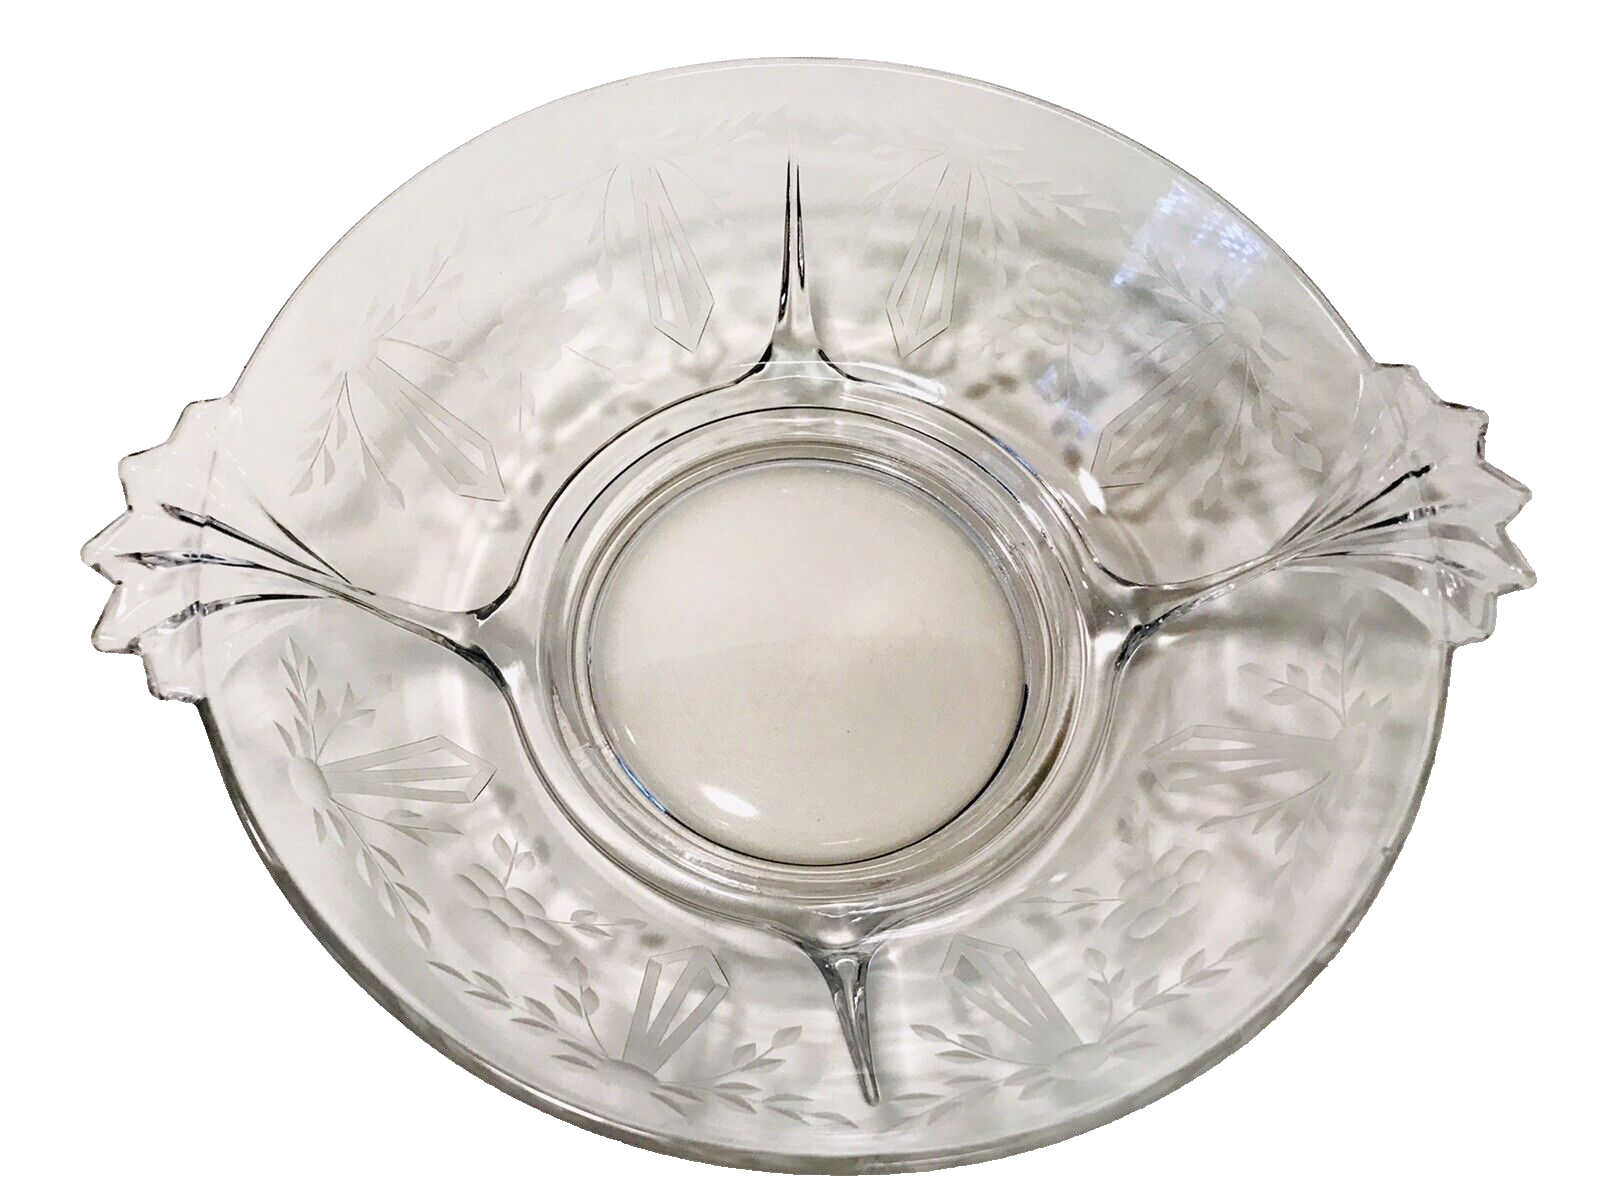 Primary image for Vintage 1940's Fostoria Etched Glass Handled Elegant Art Nouveau Serving Bowl